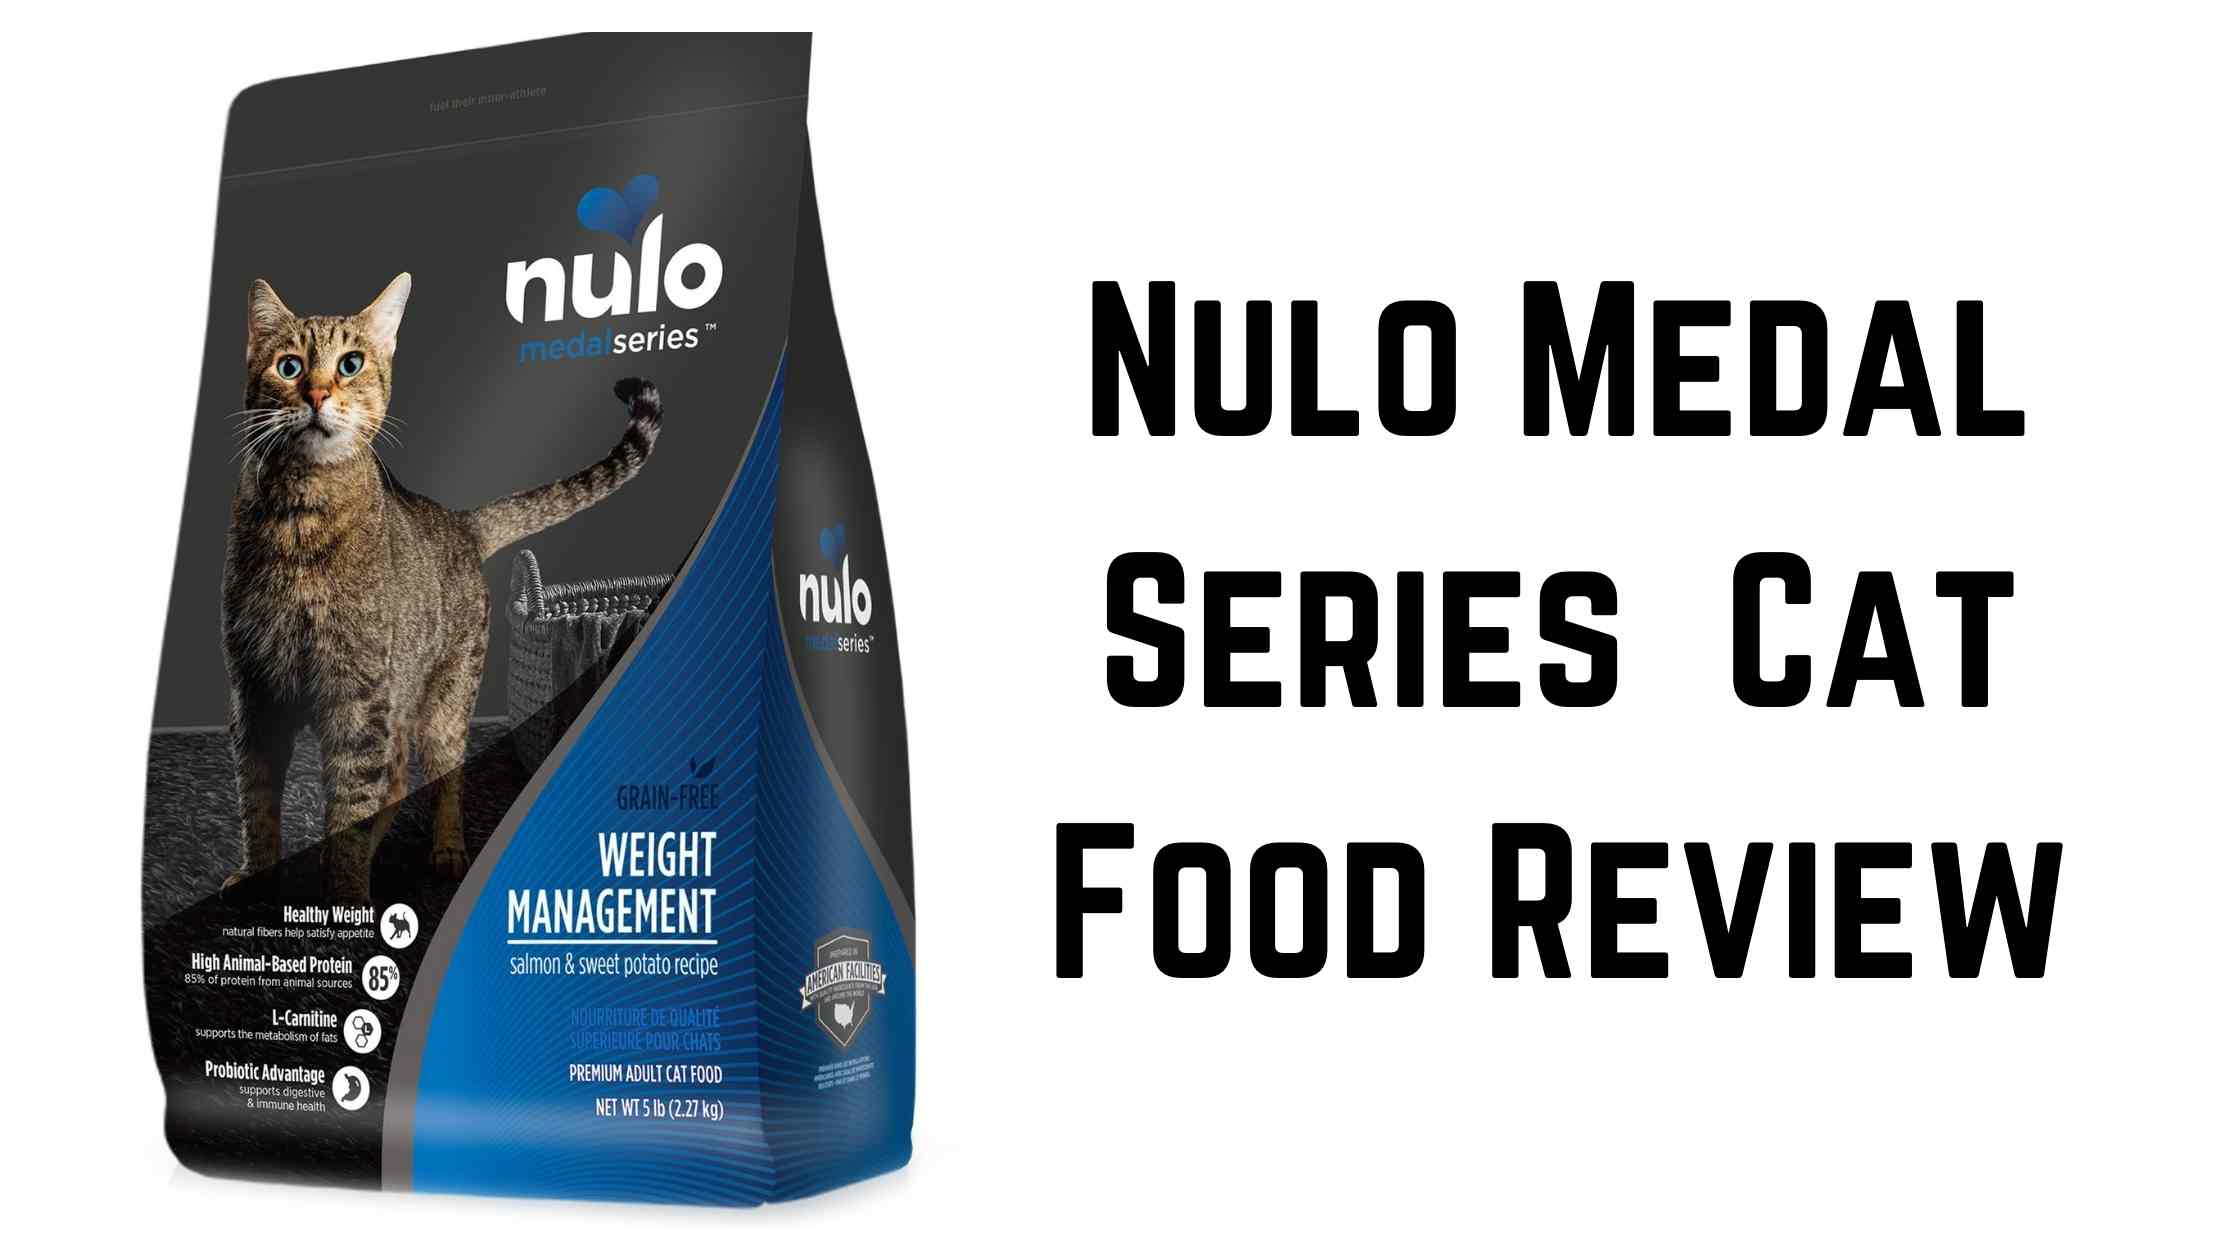 nulo medal series cat food review